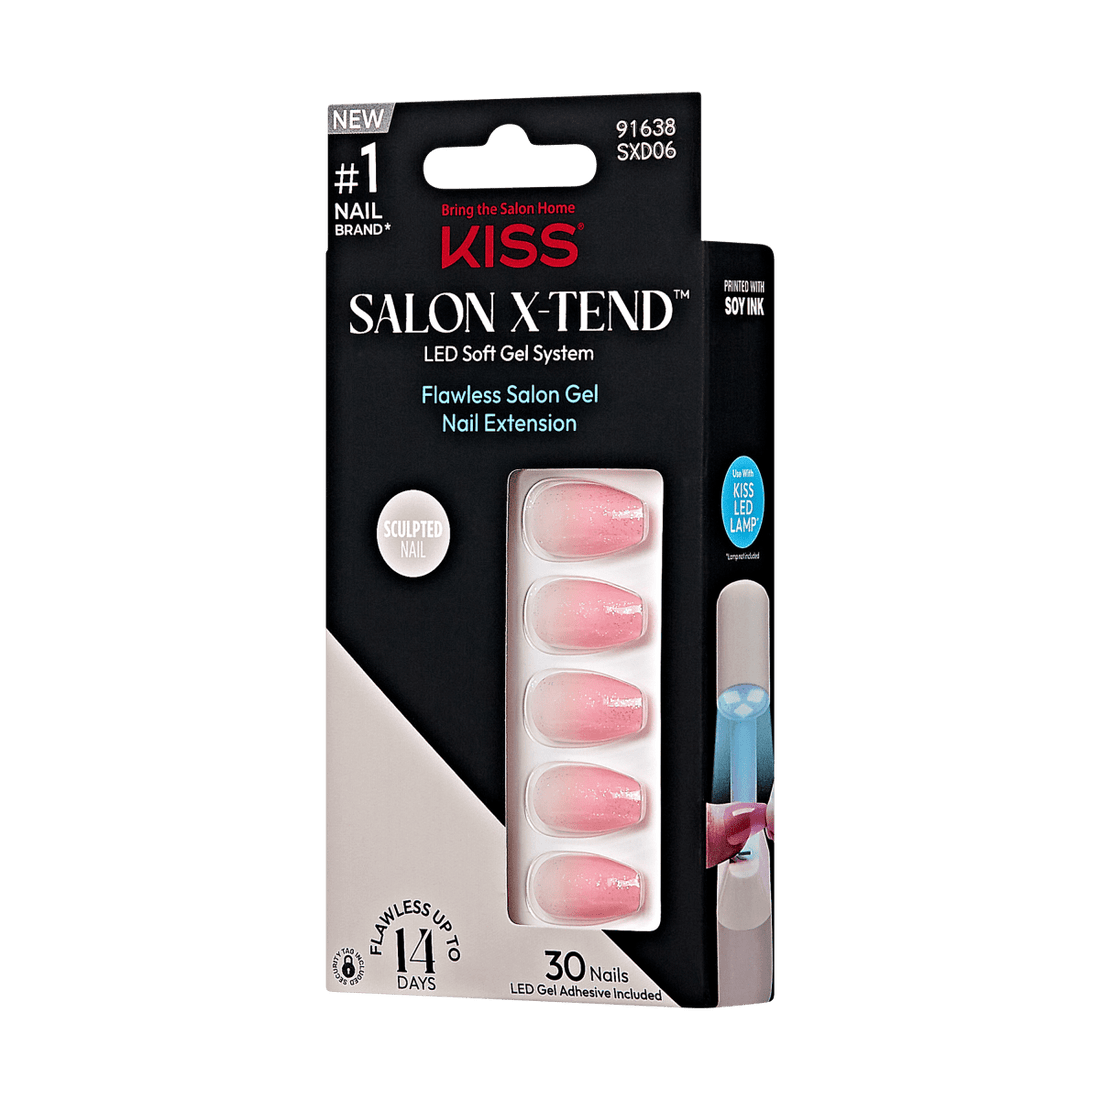 KISS Salon X-tend, Press-On Nails, Detox, Pink, Med Coffin, 30ct